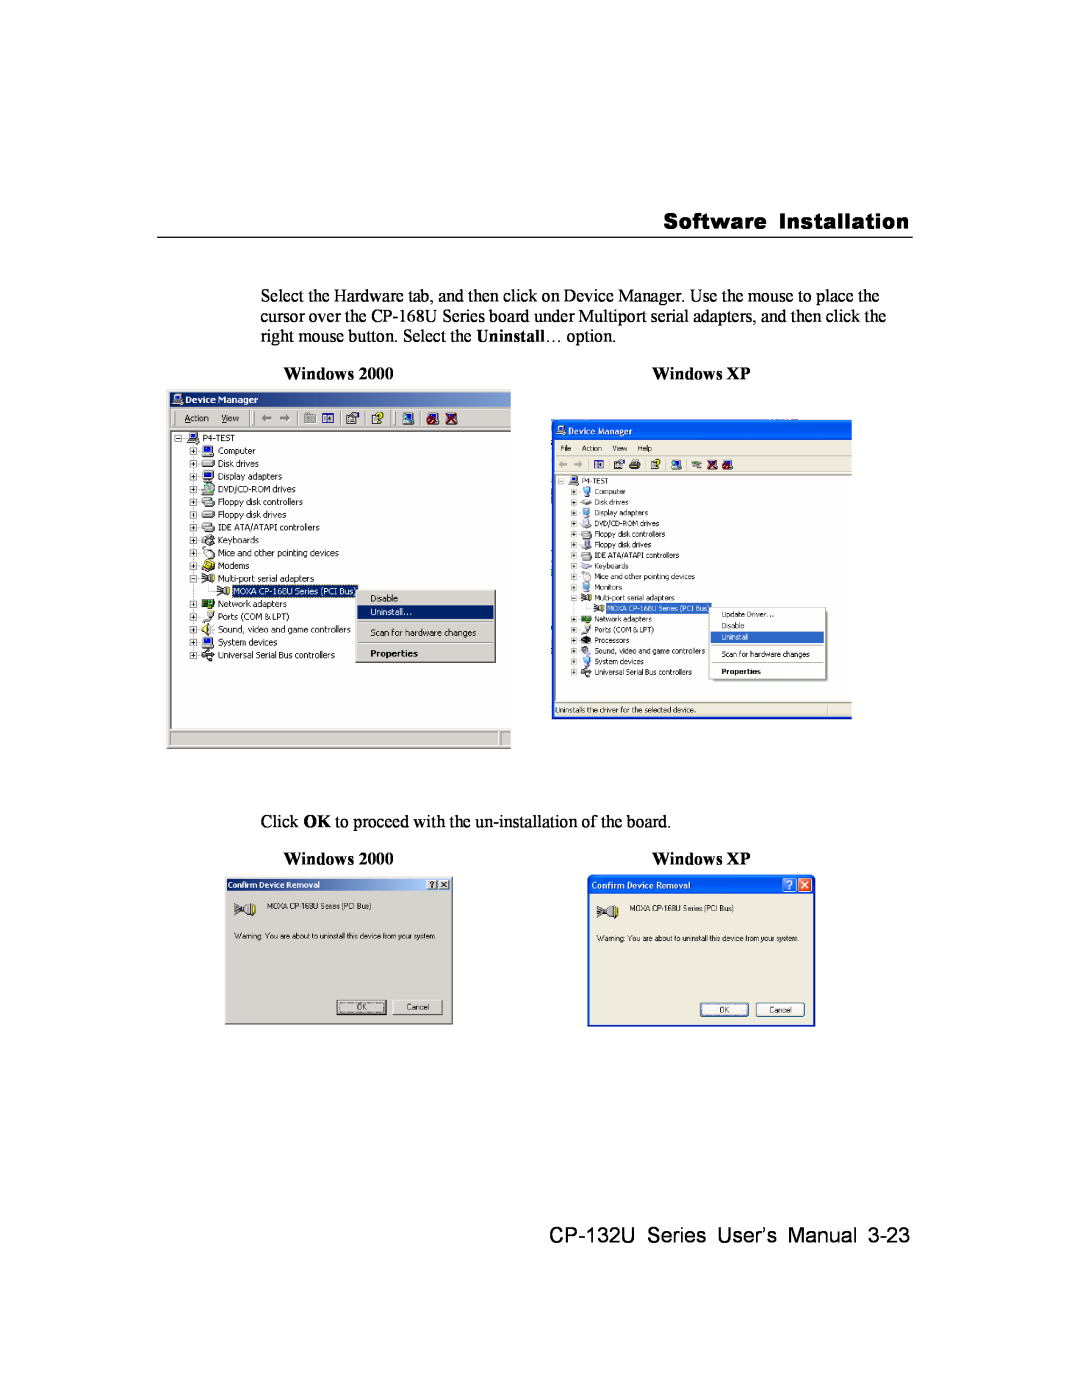 Moxa Technologies user manual Software Installation, CP-132U Series User’s Manual, Windows XP 